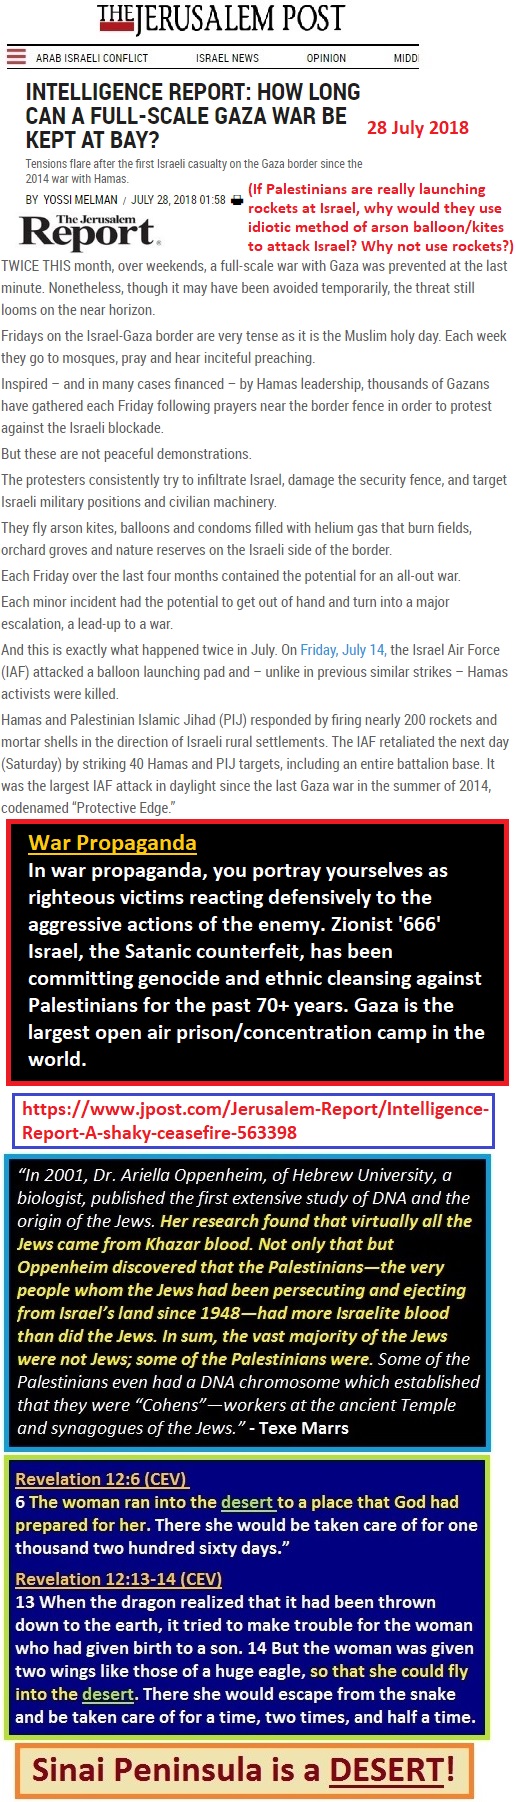 https://www.jpost.com/Jerusalem-Report/Intelligence-Report-A-shaky-ceasefire-563398